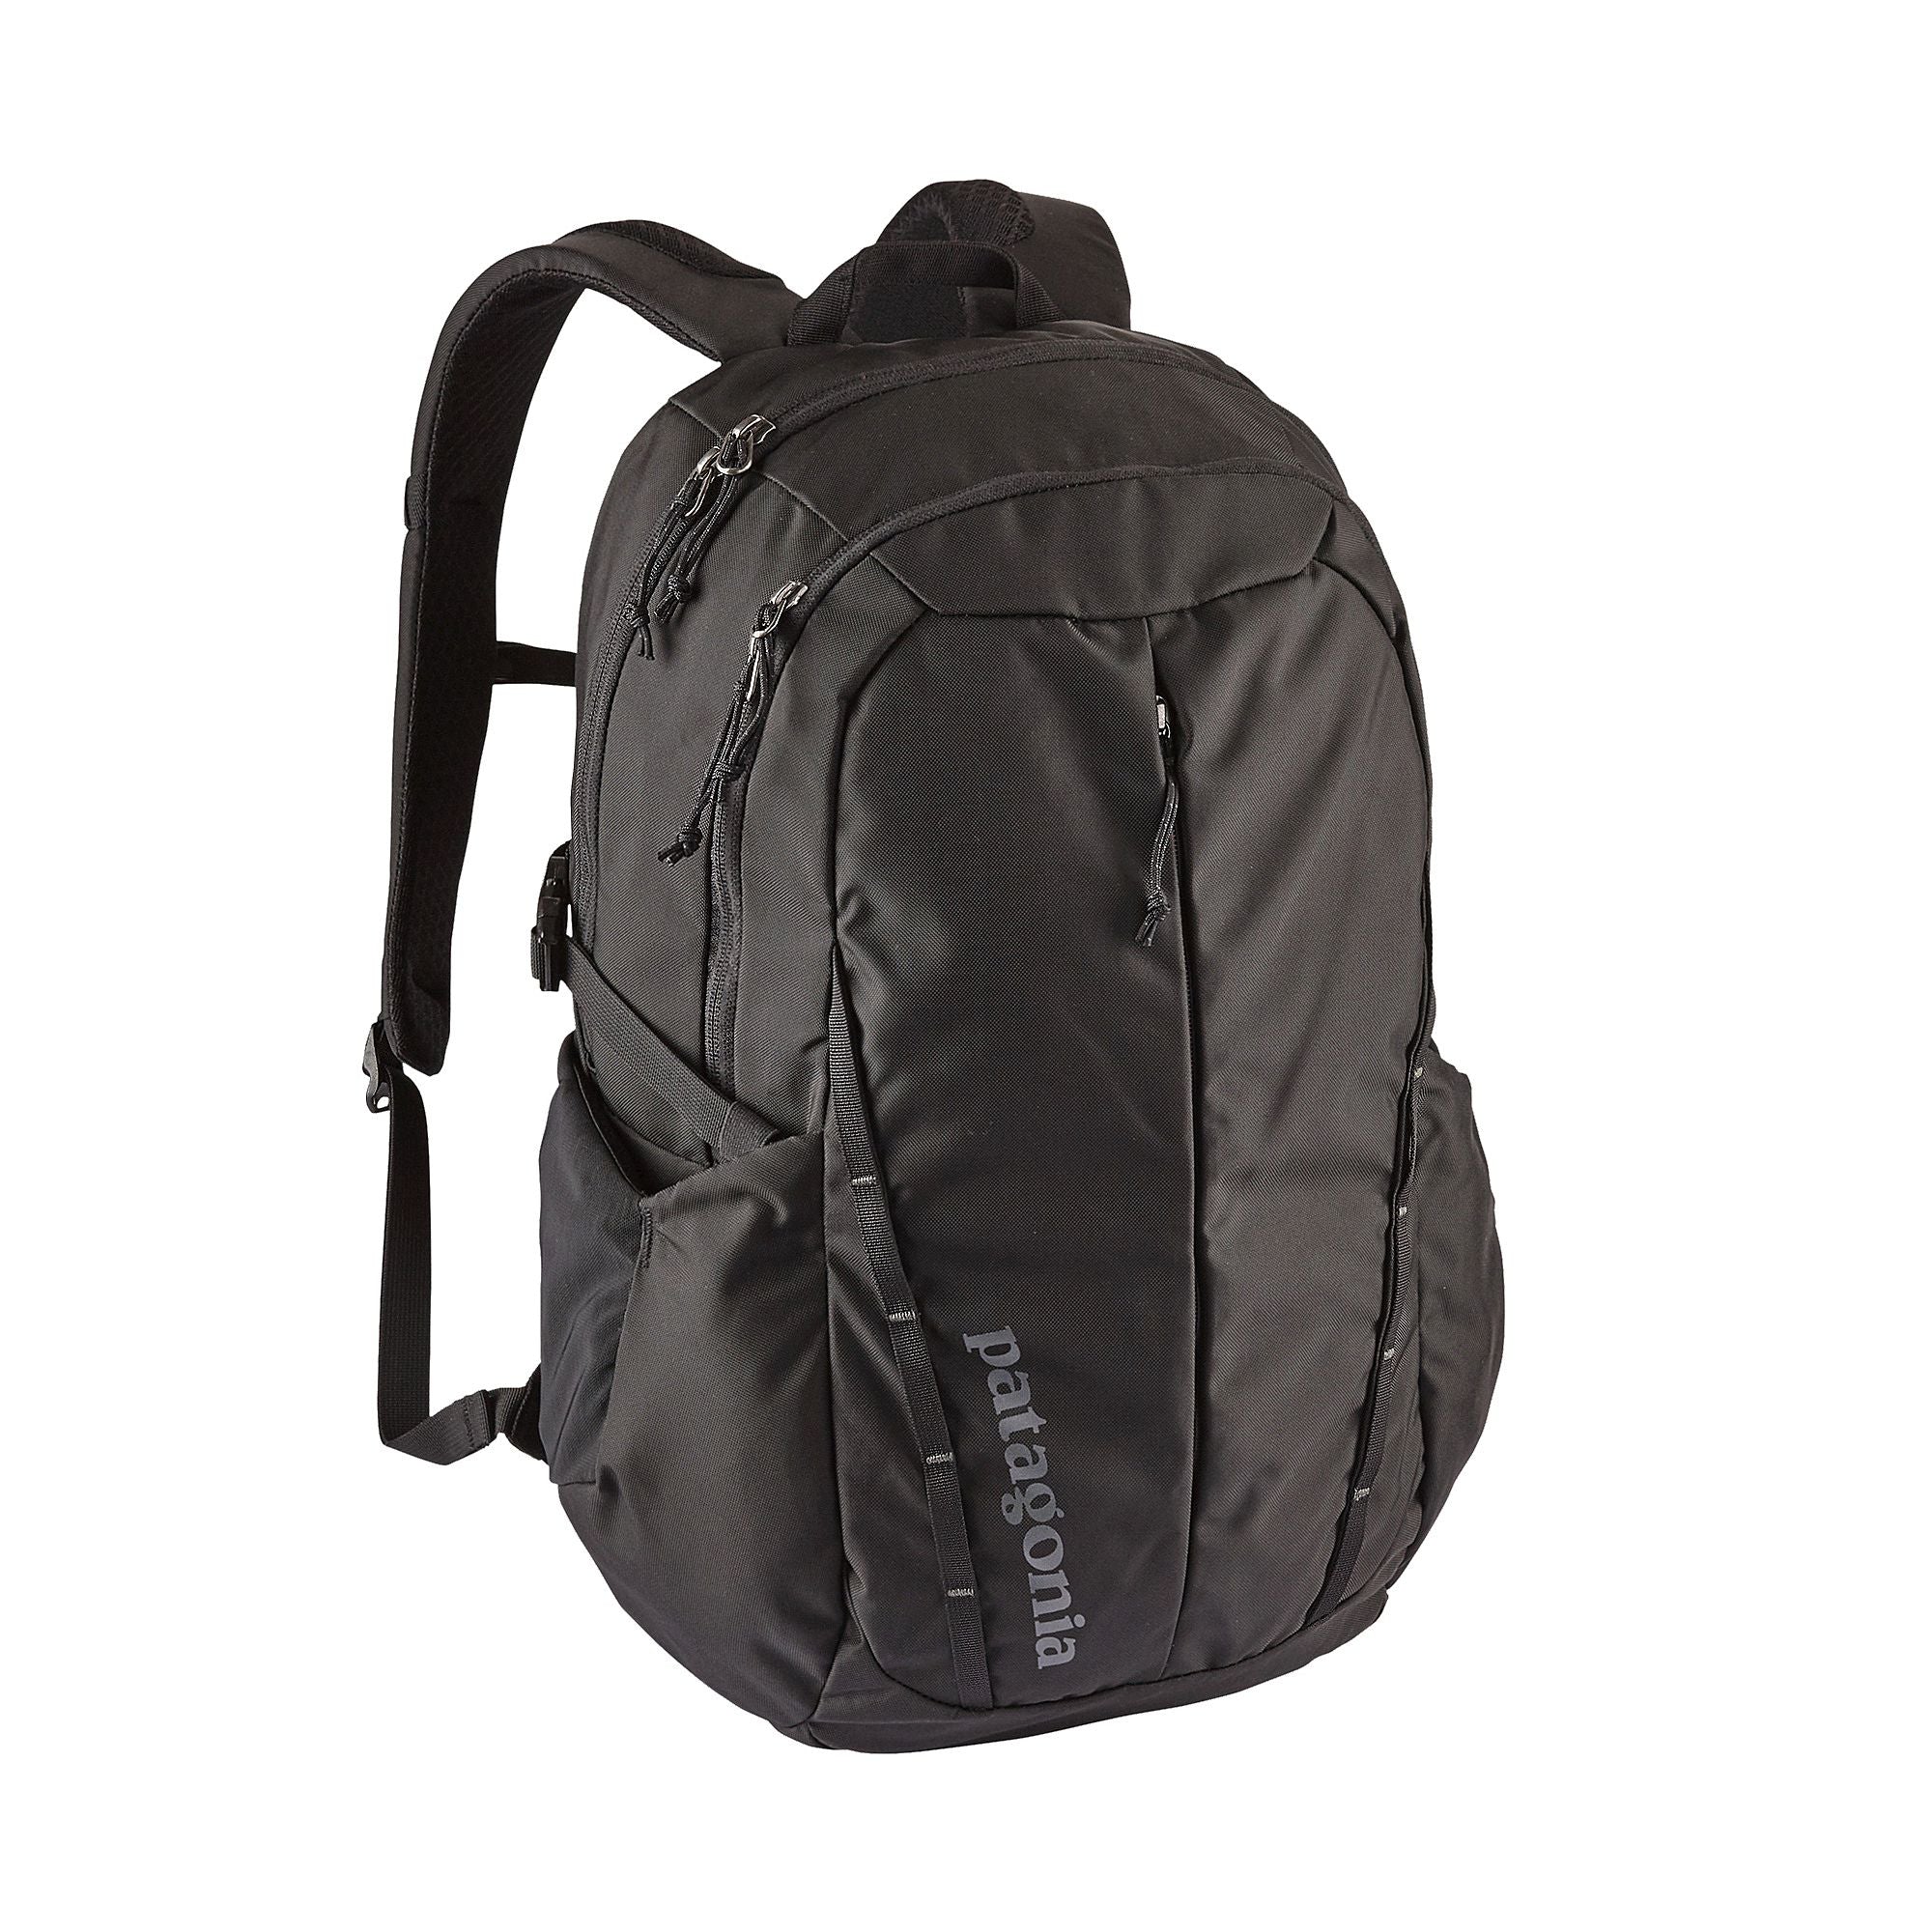 Patagonia Black Hole Backpack - 32L - Black | Backpacks | Huckberry